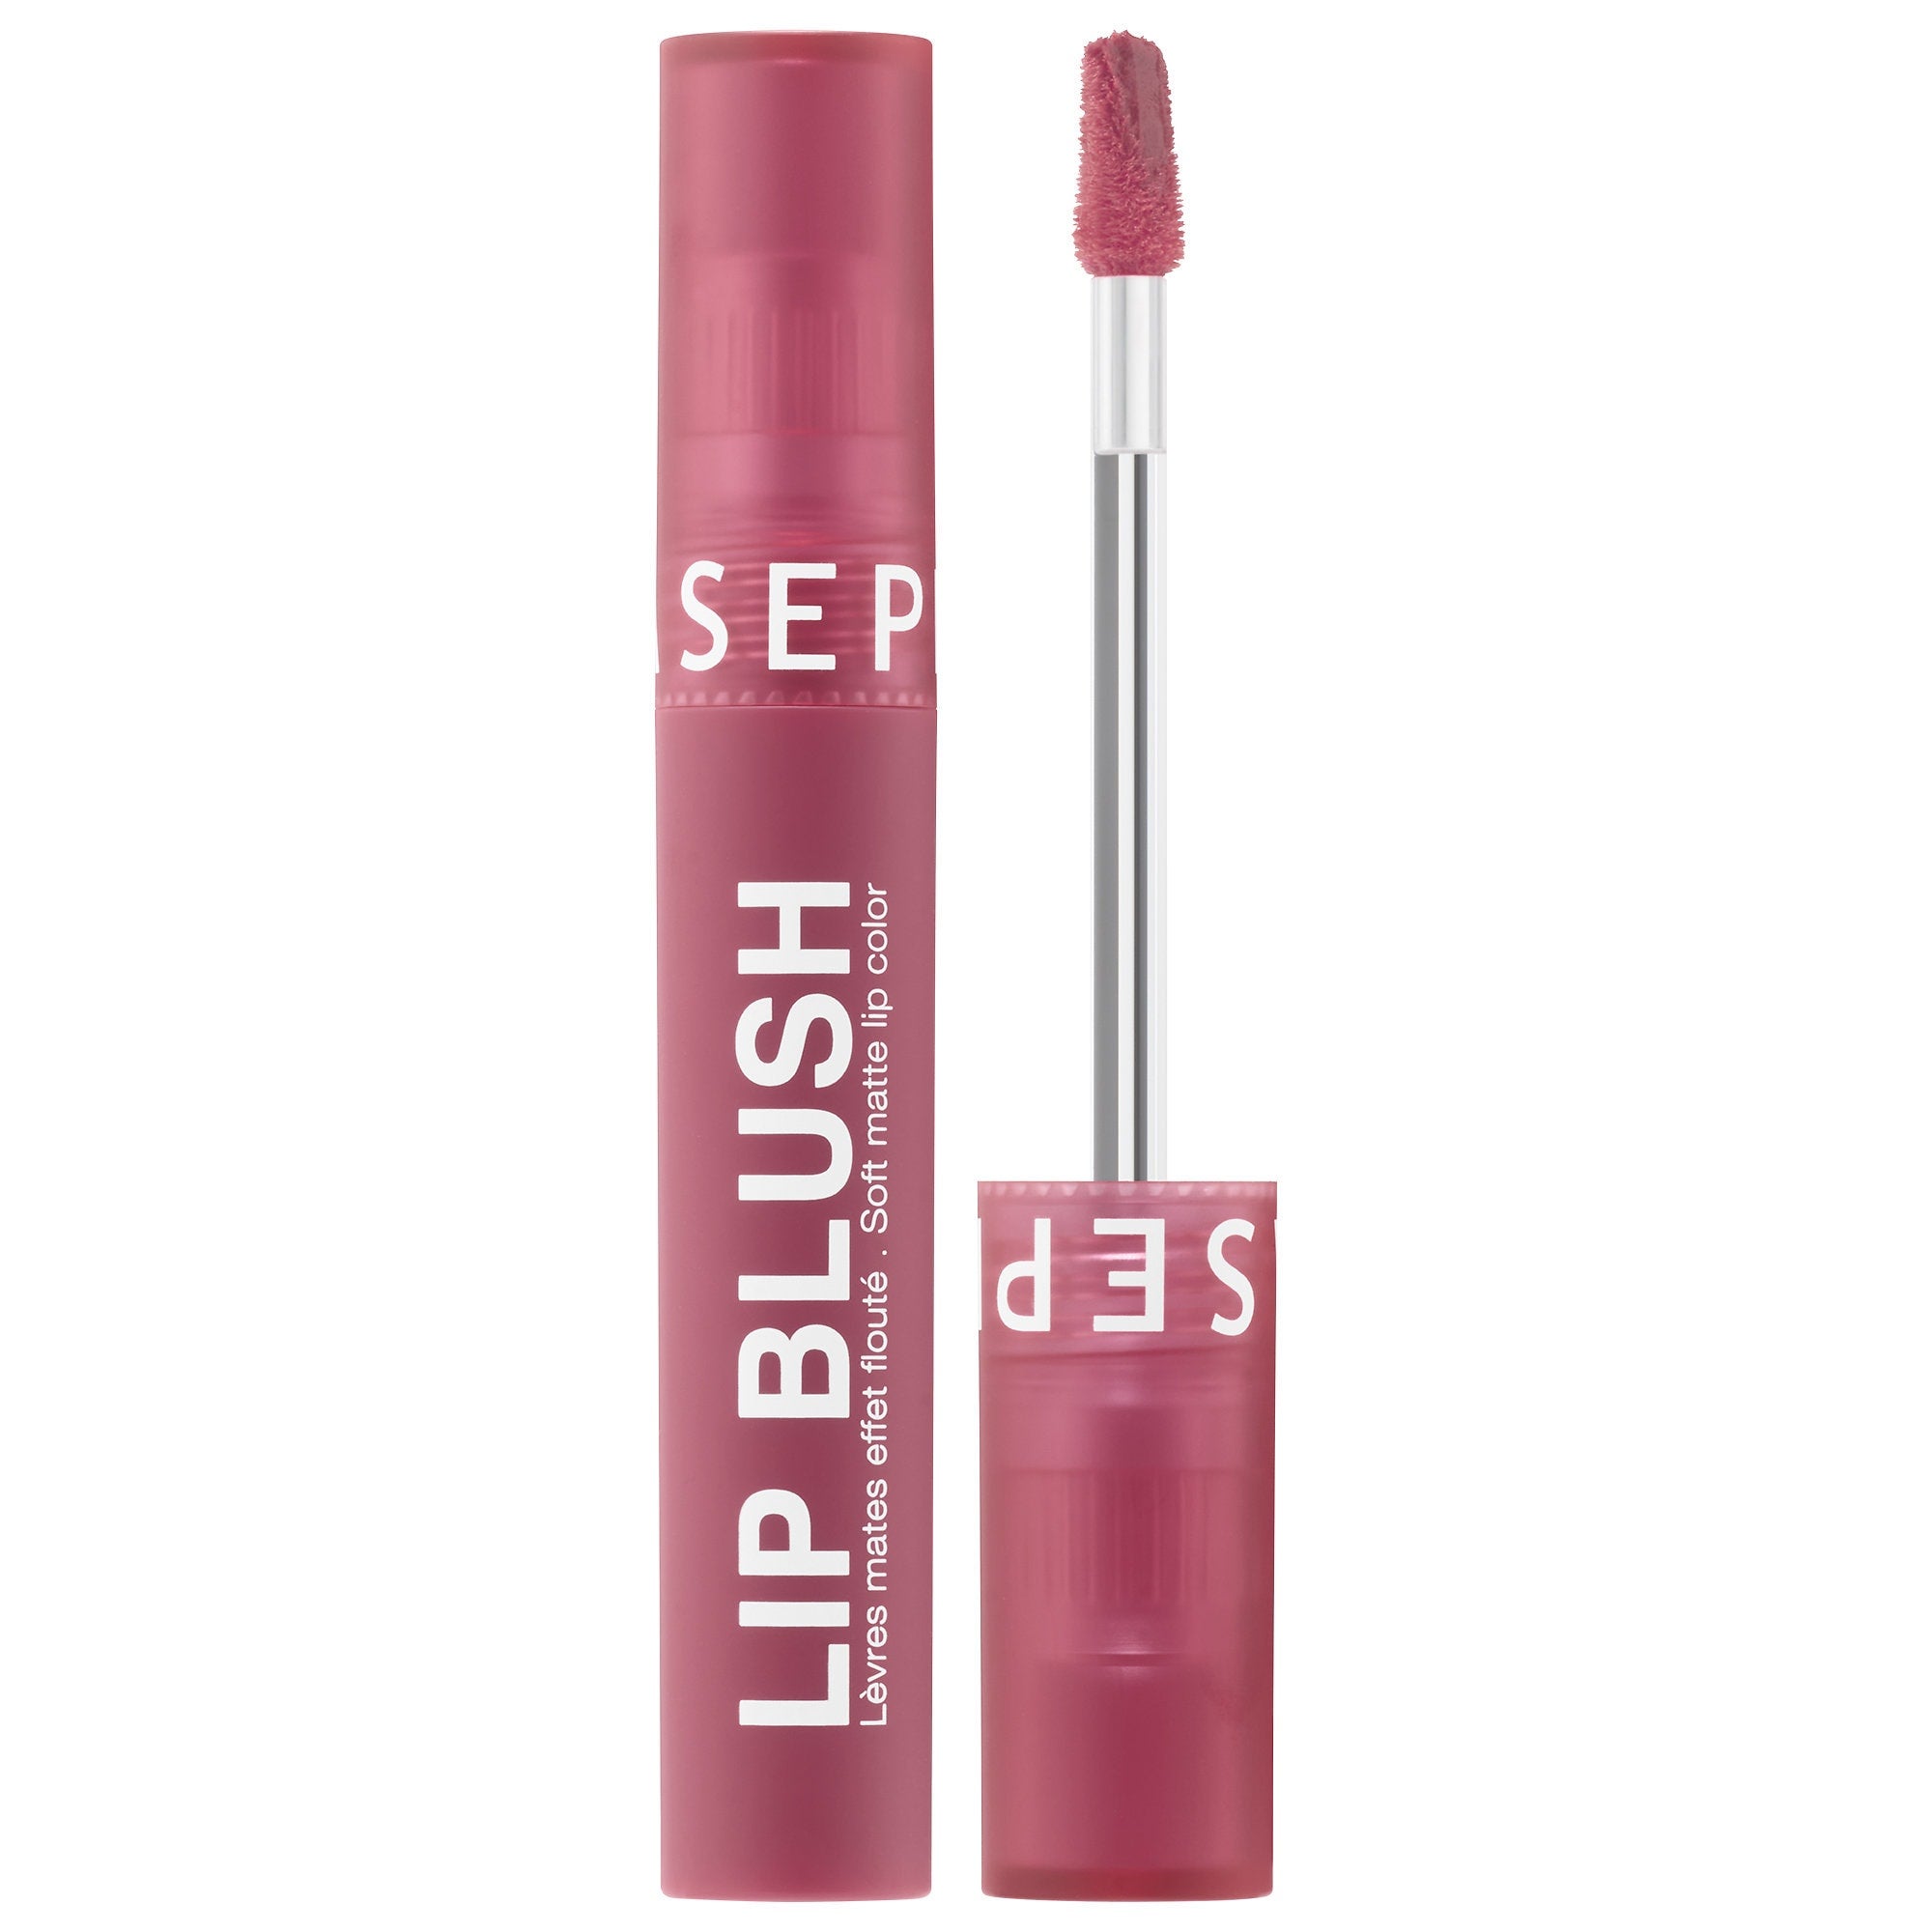 Sephora Lip Blush Blotted Matte Lipstick In Cuddle Time